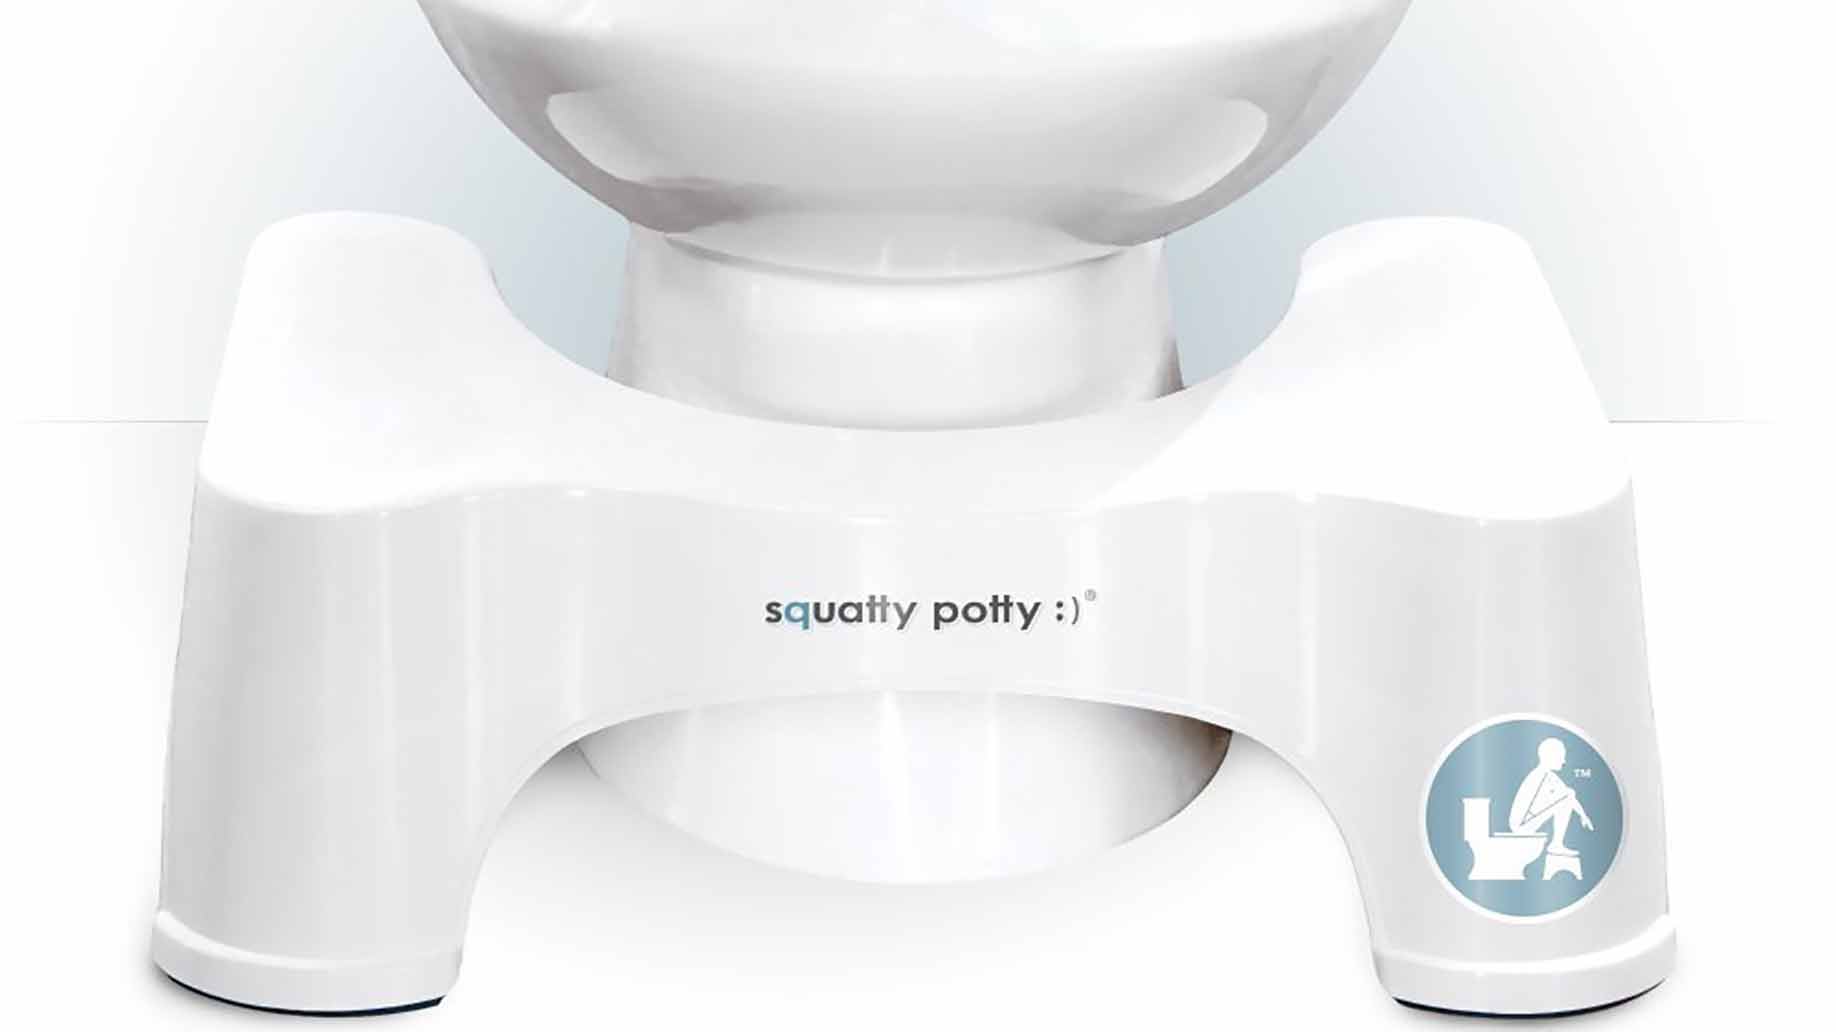 squatty potty demonstration under the toilet white